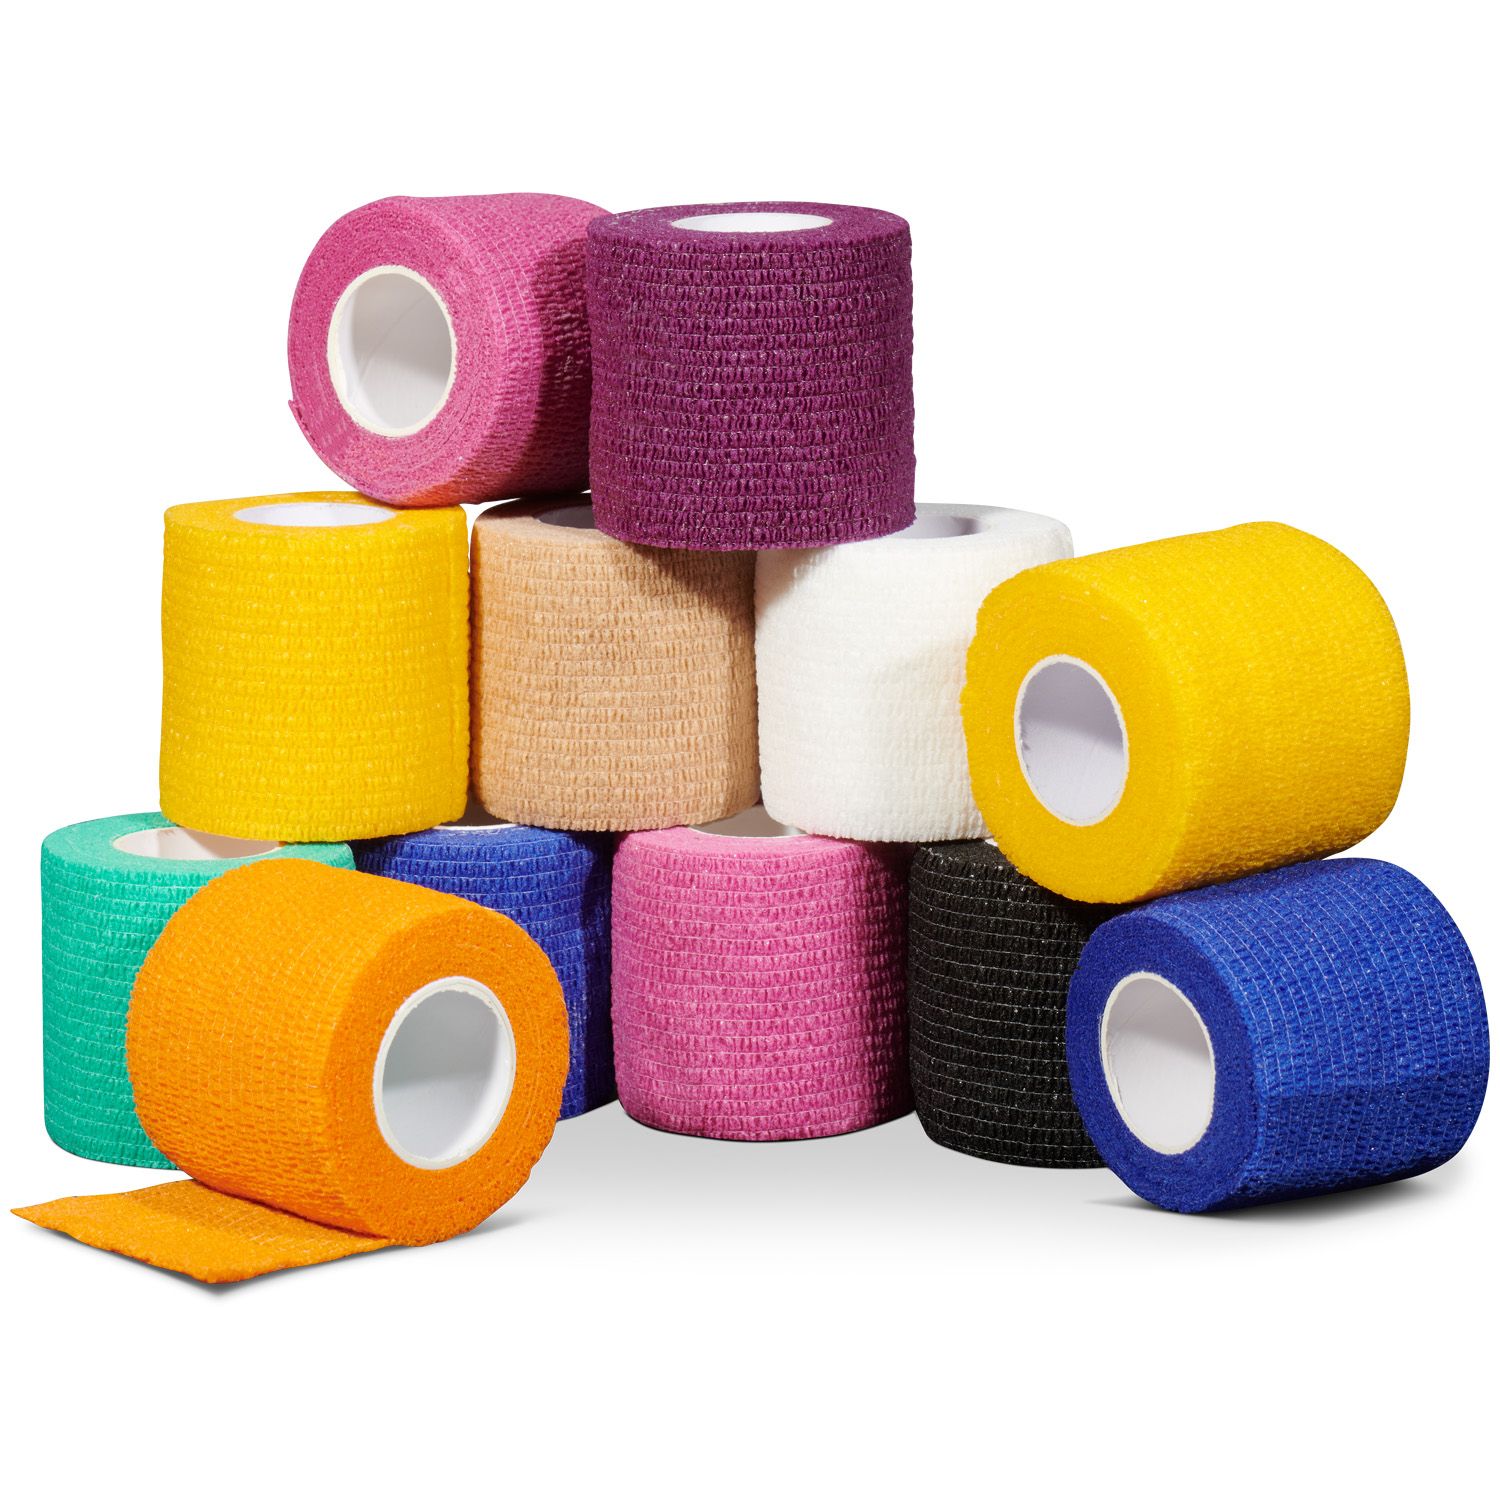 gladiator sports underwrap bandage per 12 rolls